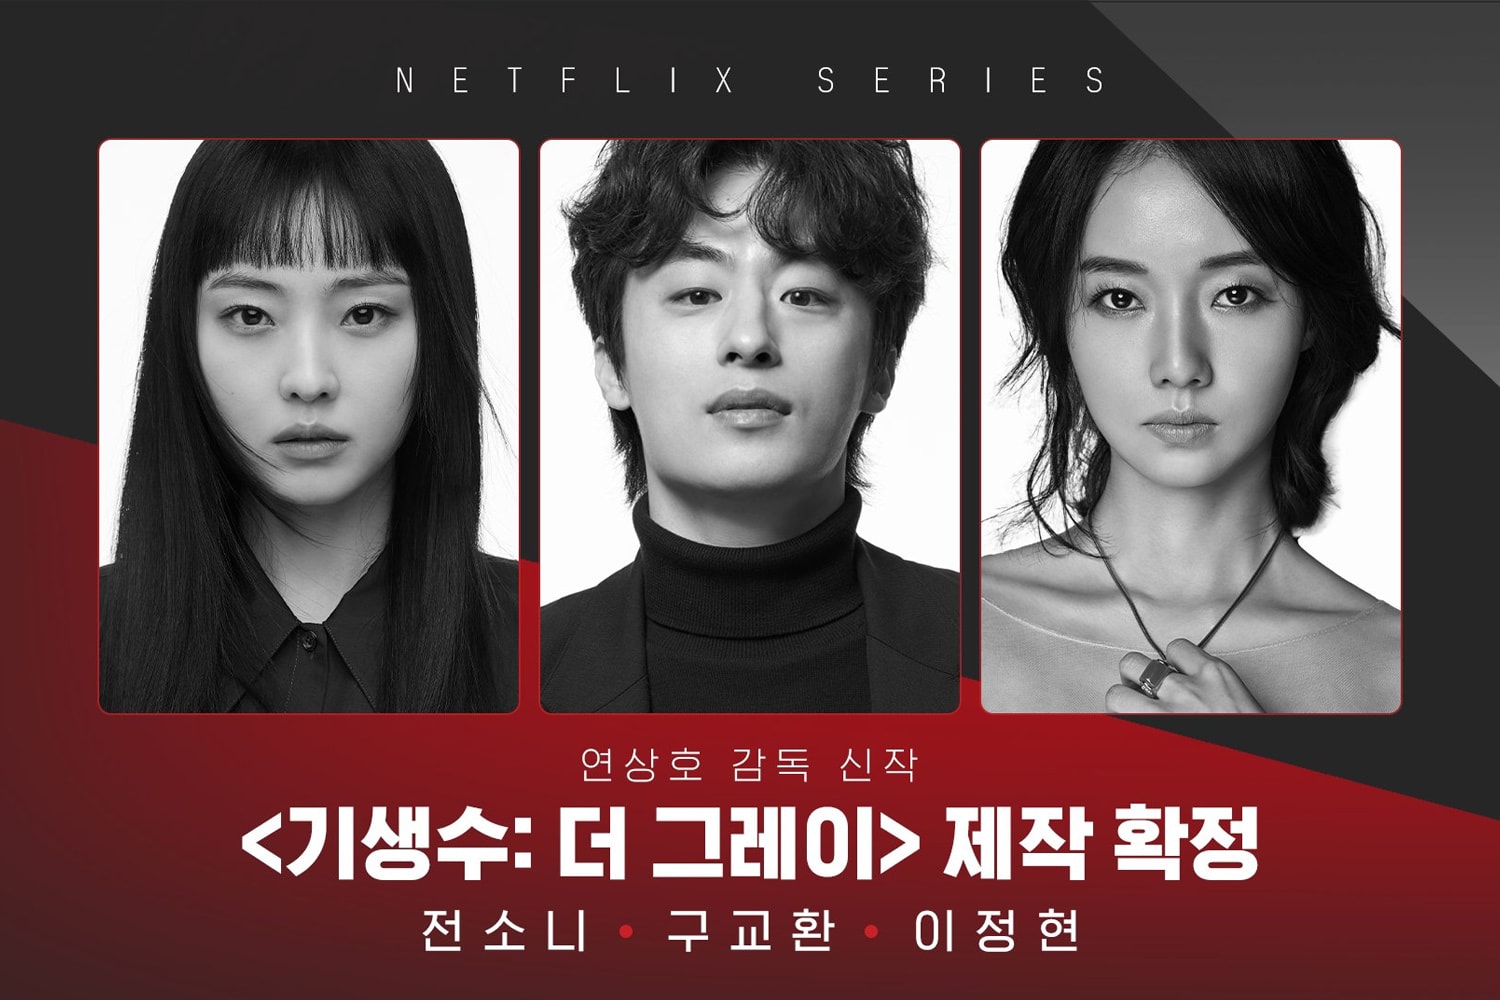 Netflix 宣佈翻拍經典科幻恐怖漫畫《寄生獸》打造全新「韓國版」真人版影集